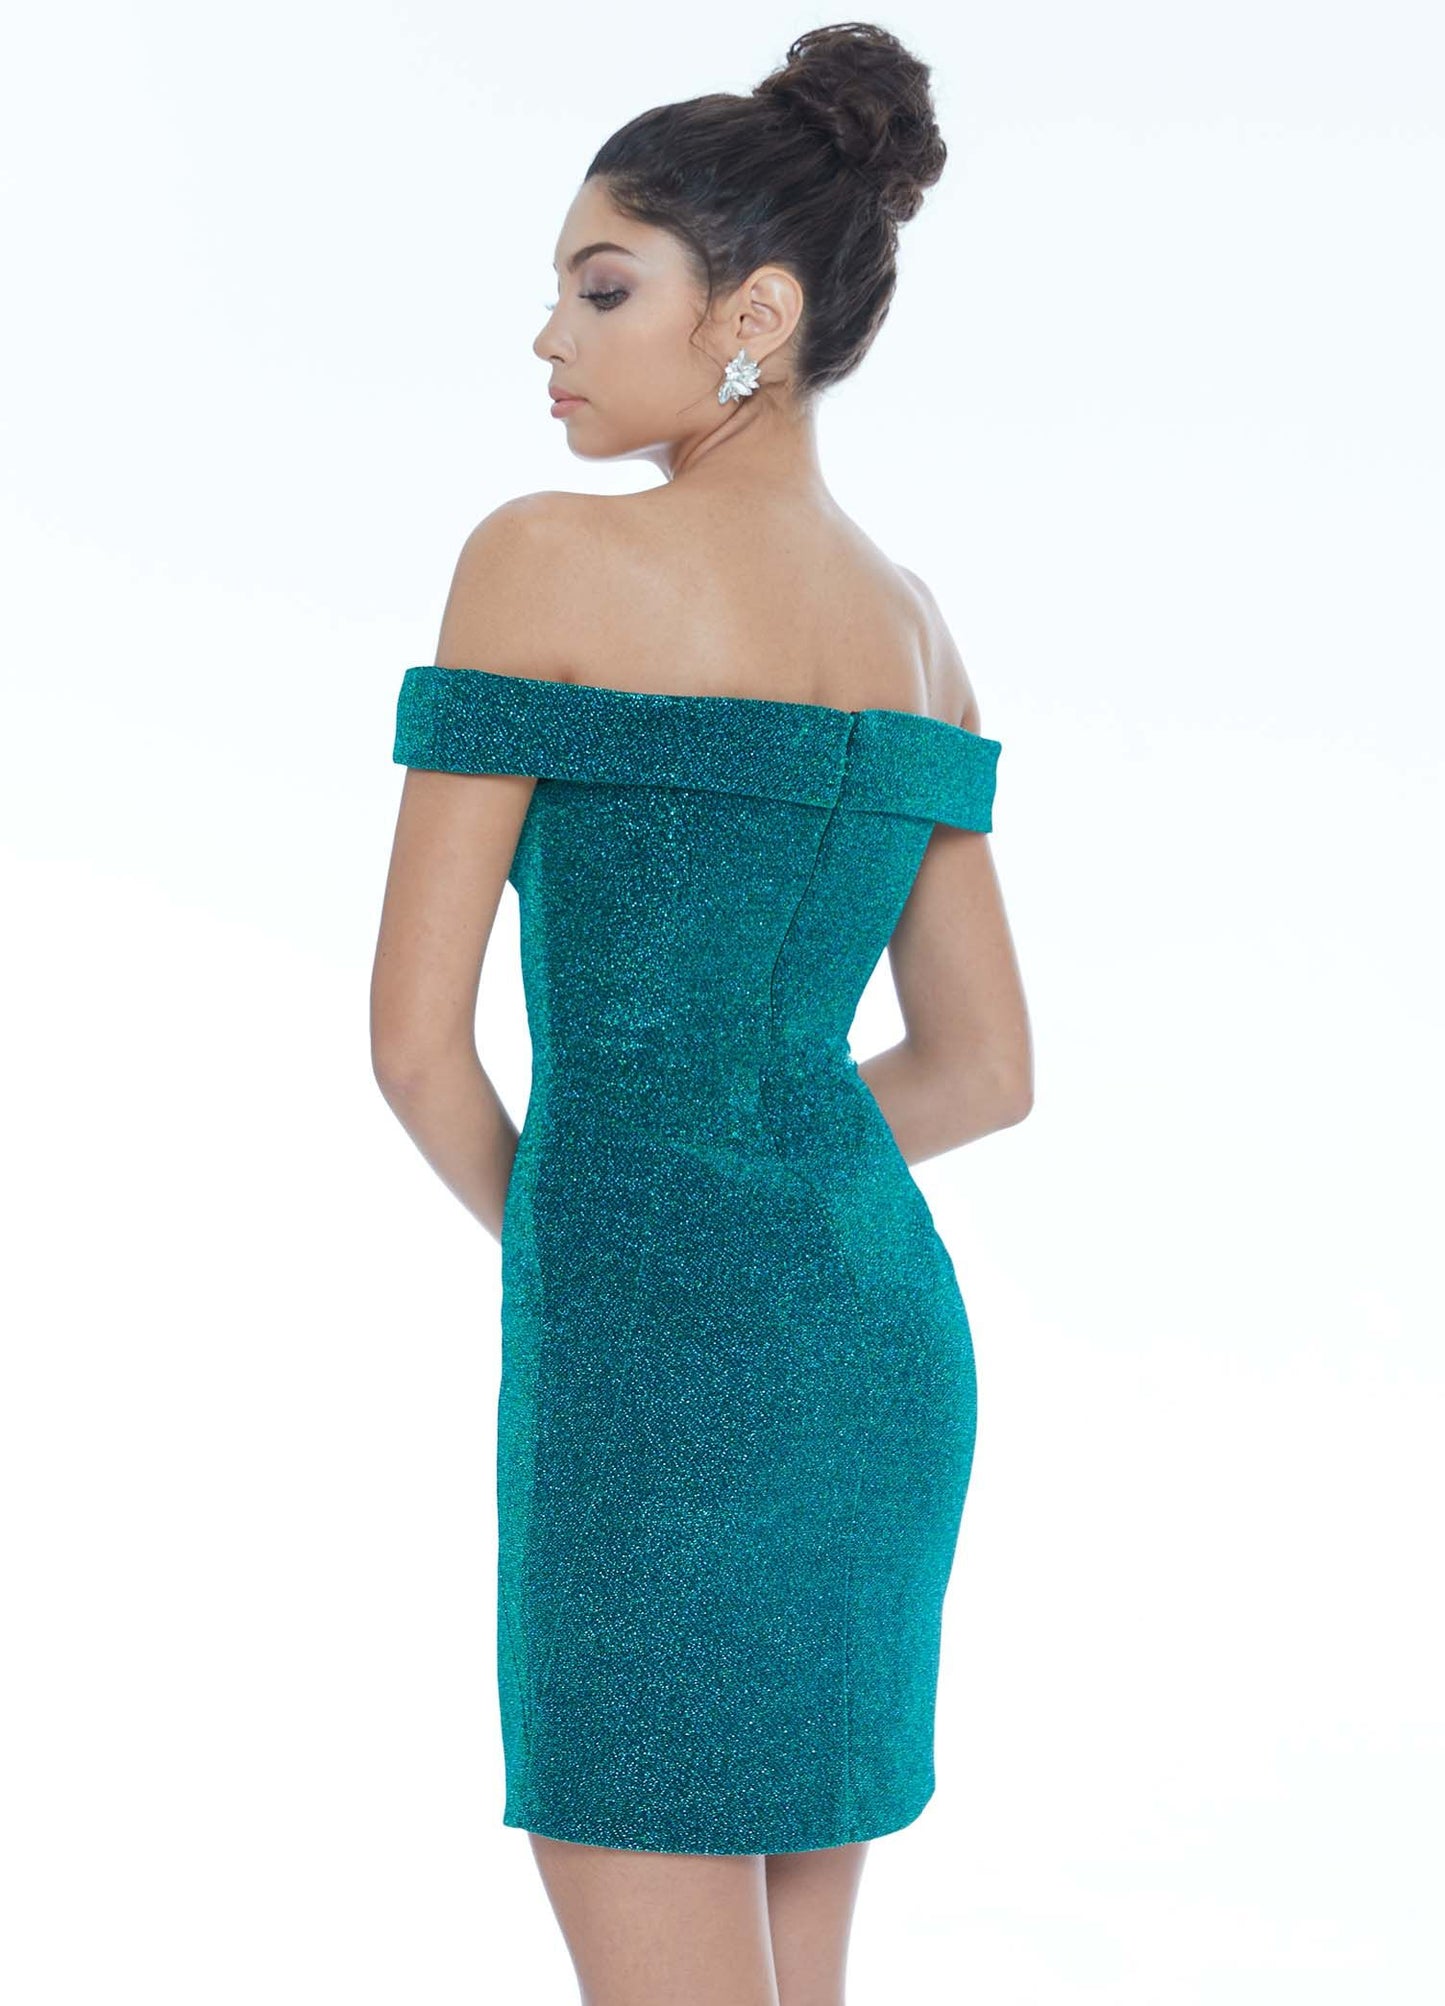 Ashley Lauren 4240 size 6 Emerald cocktail Dress off the shoulder fitted glitter short dress